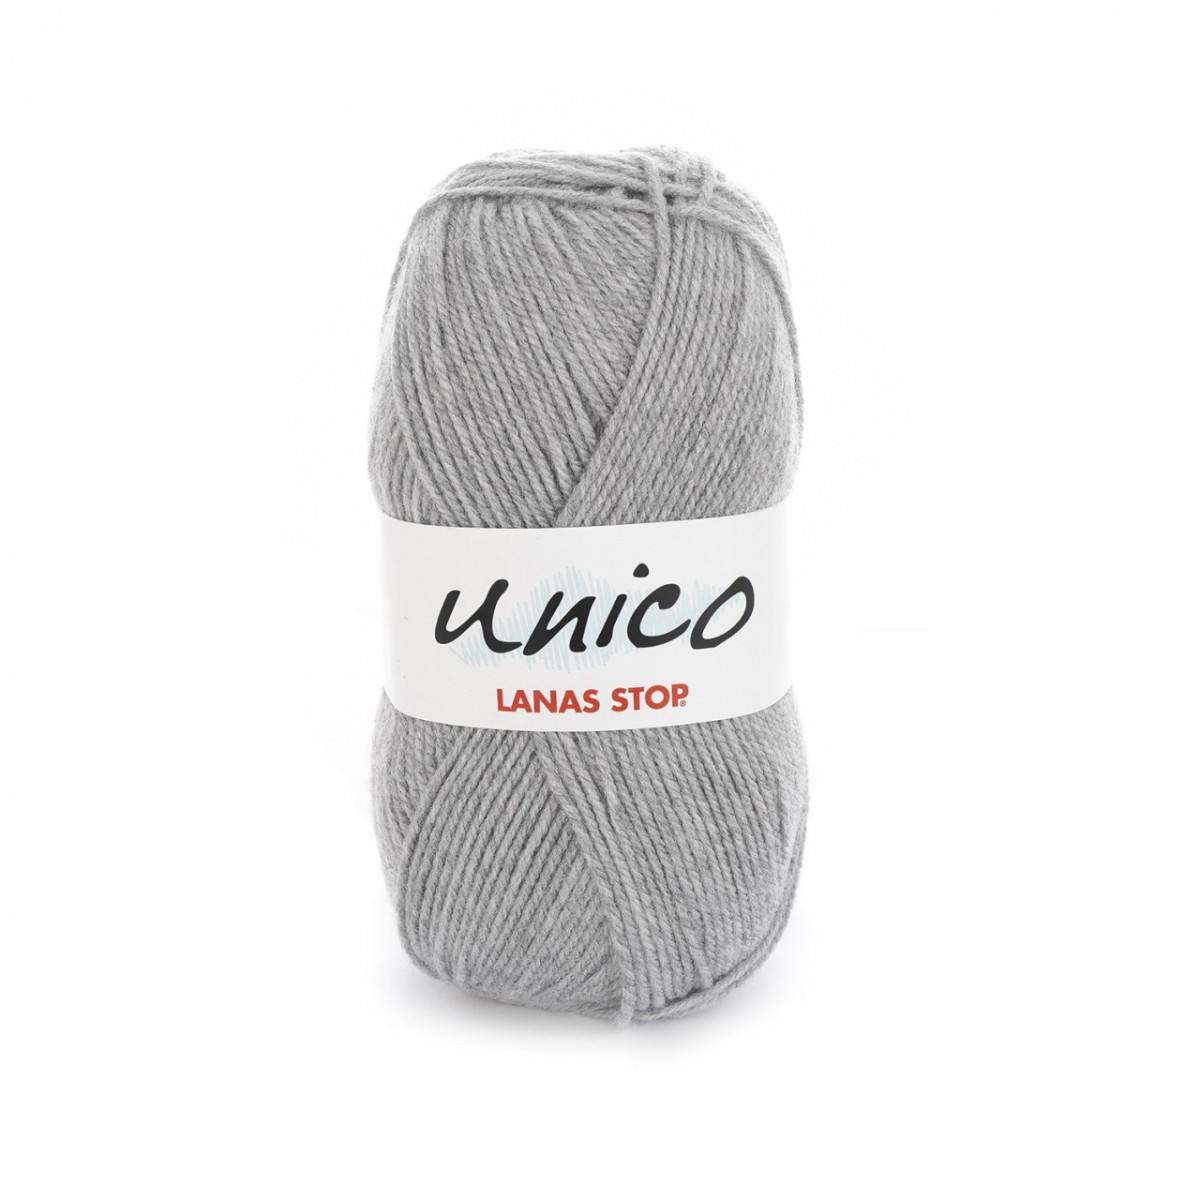 2 NEGRO LANAS STOP von Katia 266 m Wolle UNICO - 100 g // ca